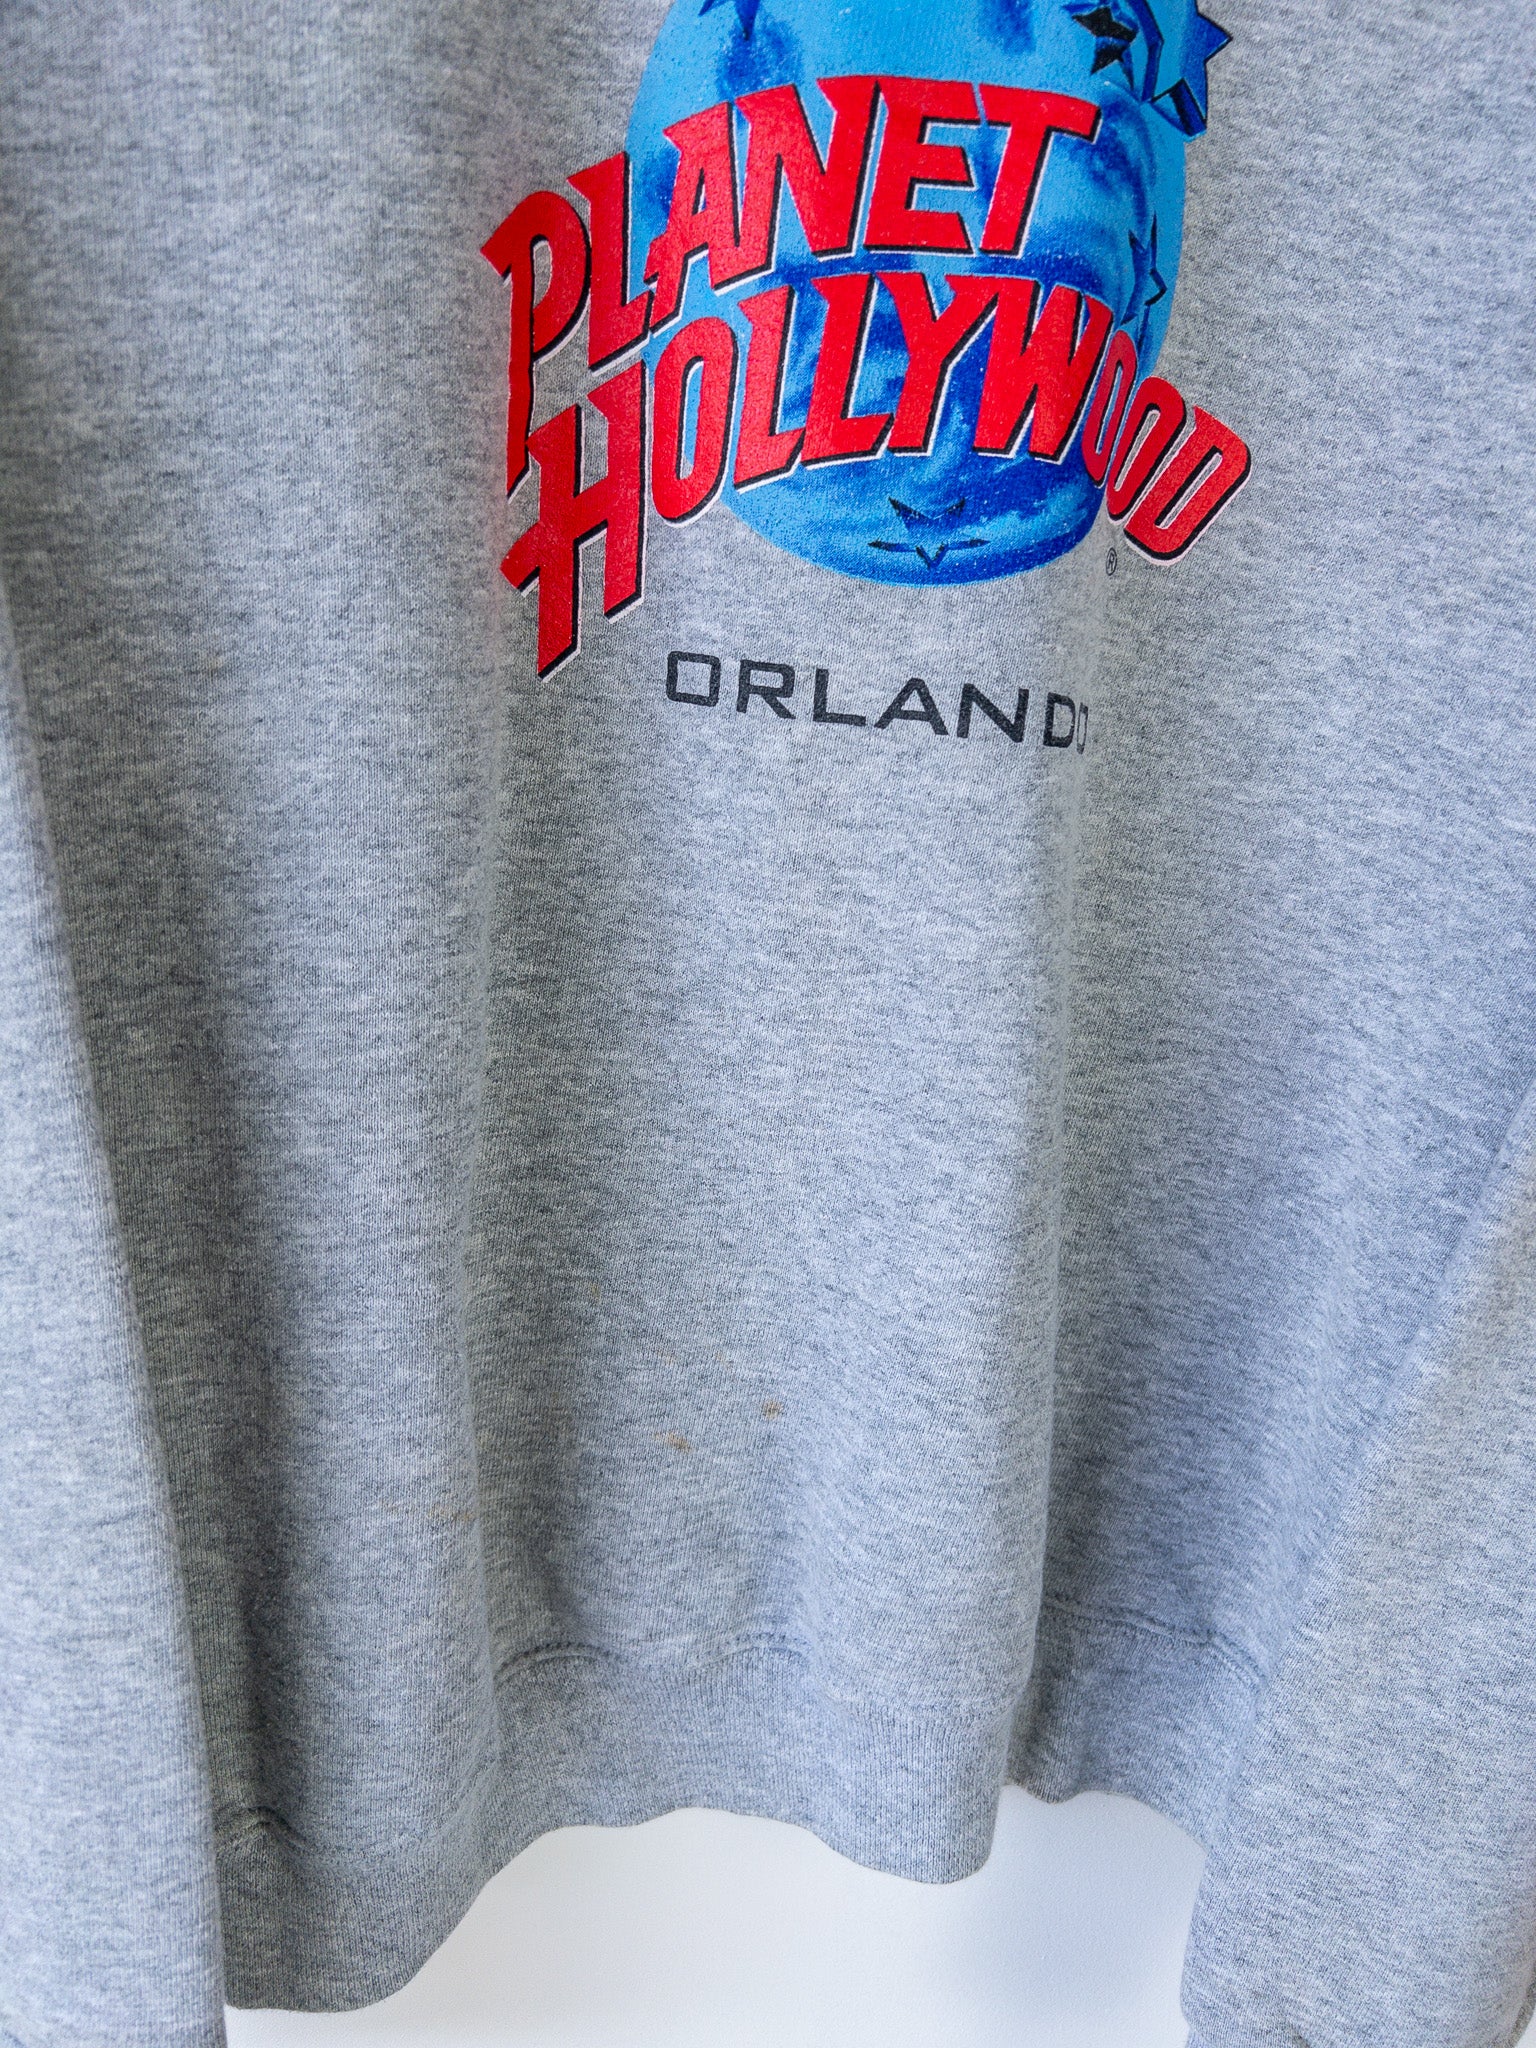 Vintage Planet Hollywood Orlando Sweatshirt (S)